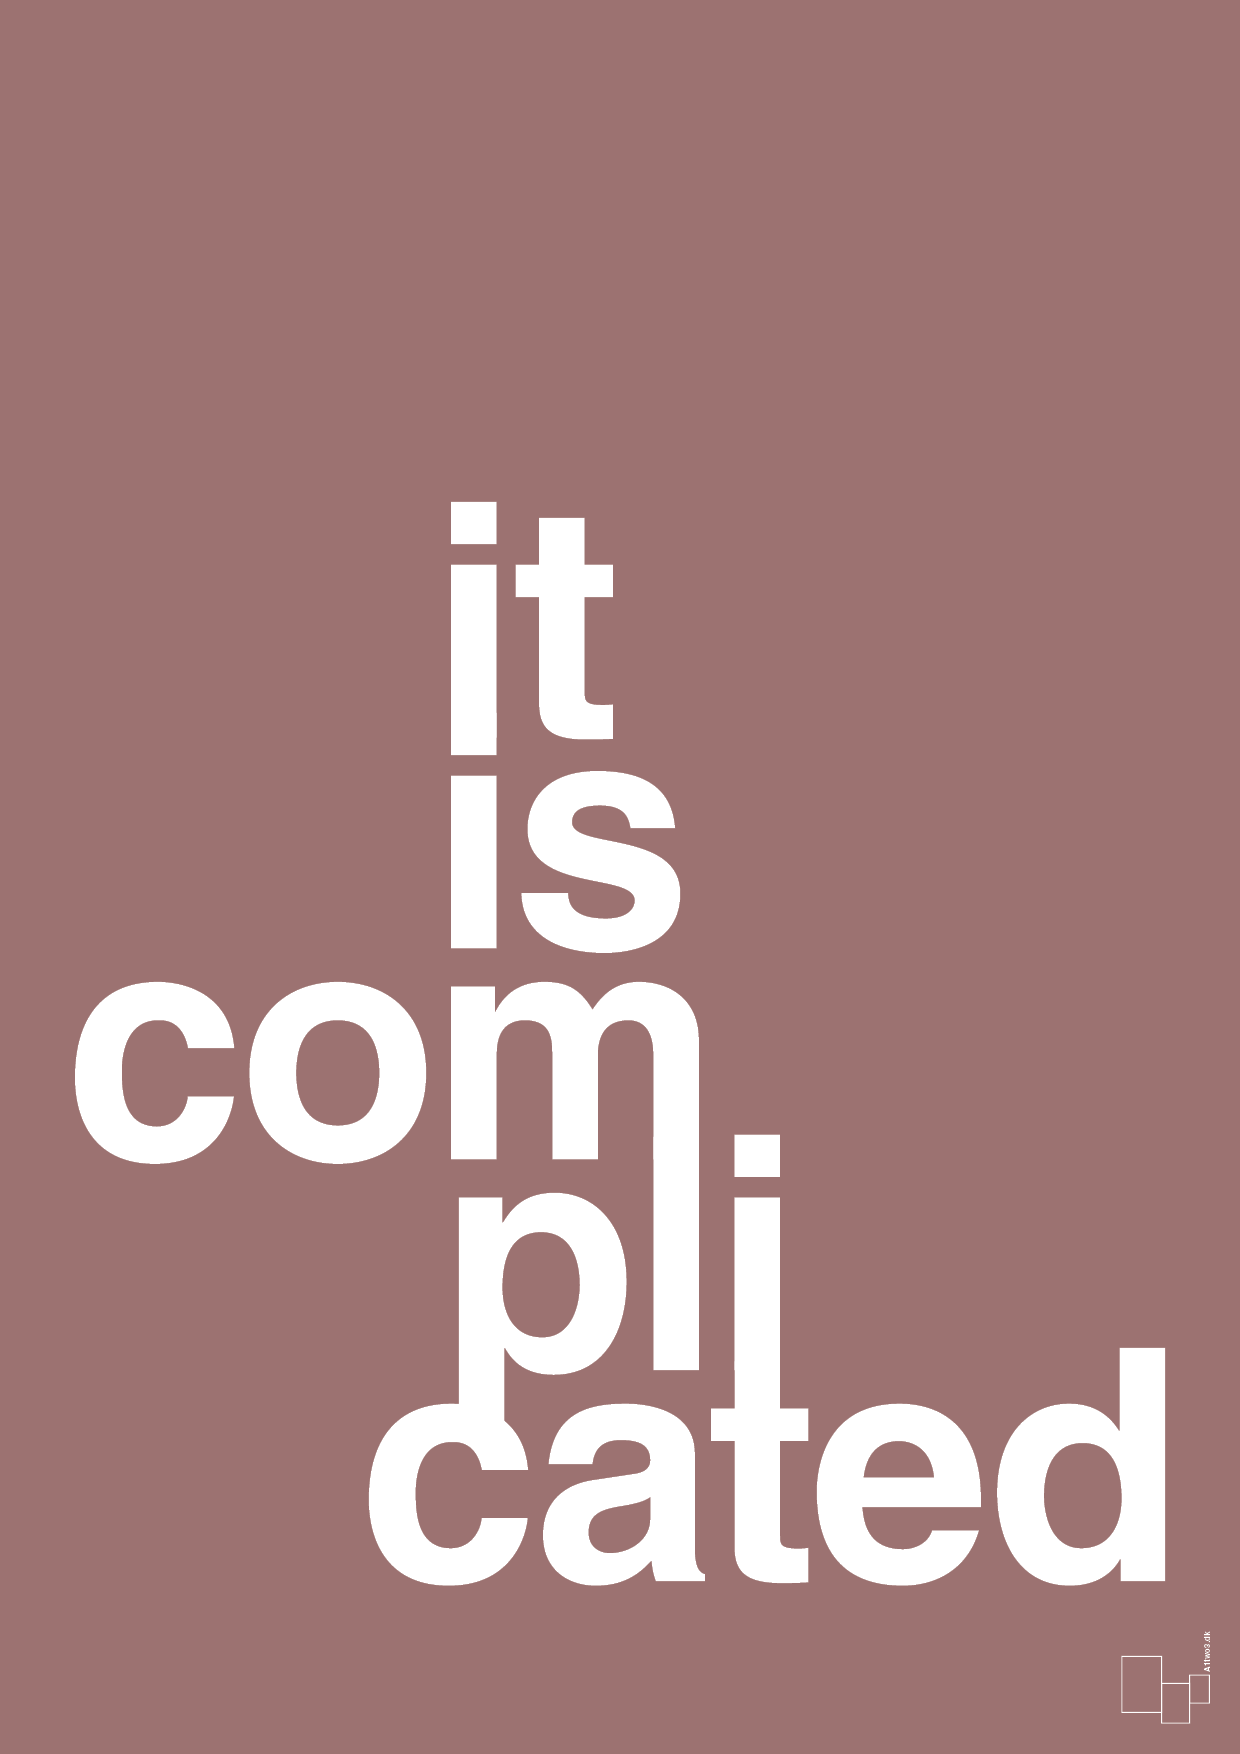 it is complicated - Plakat med Ordsprog i Plum